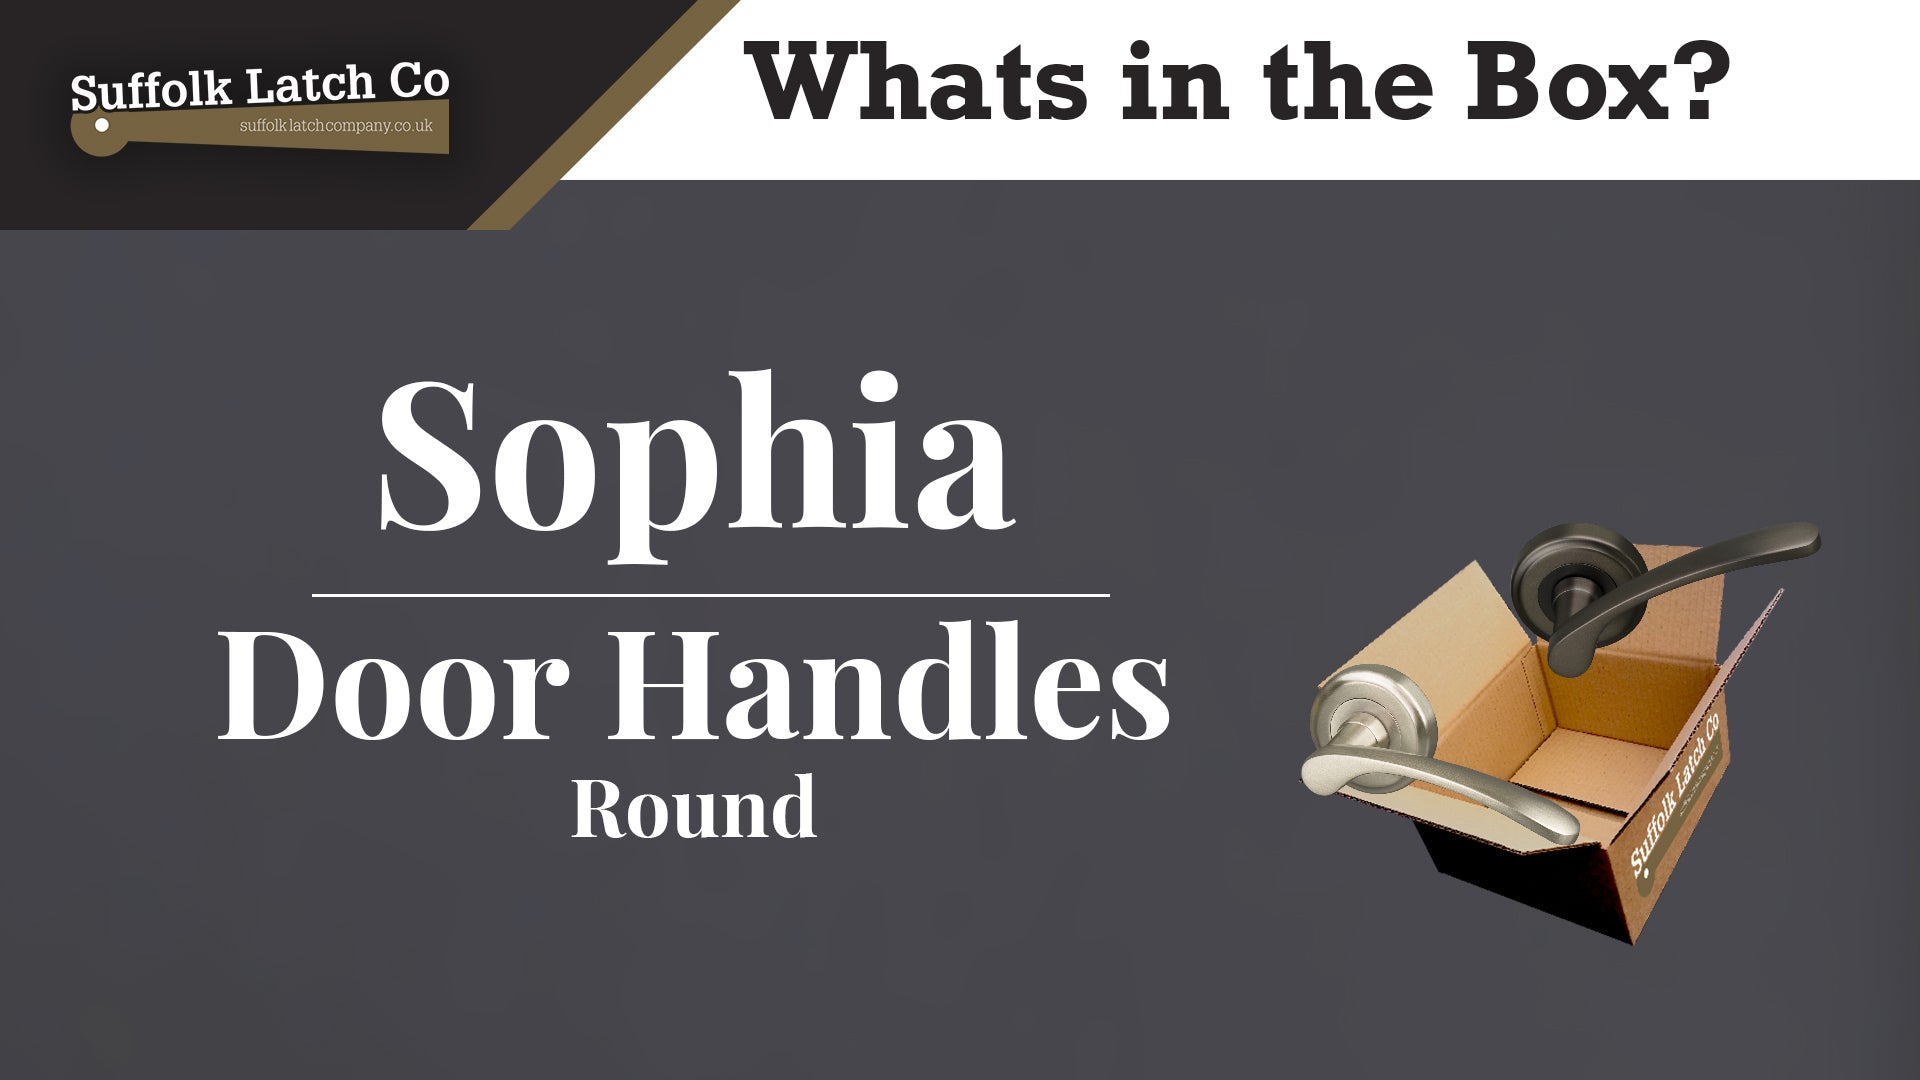 What's in the Box: Sophia Round Rose Door Handles